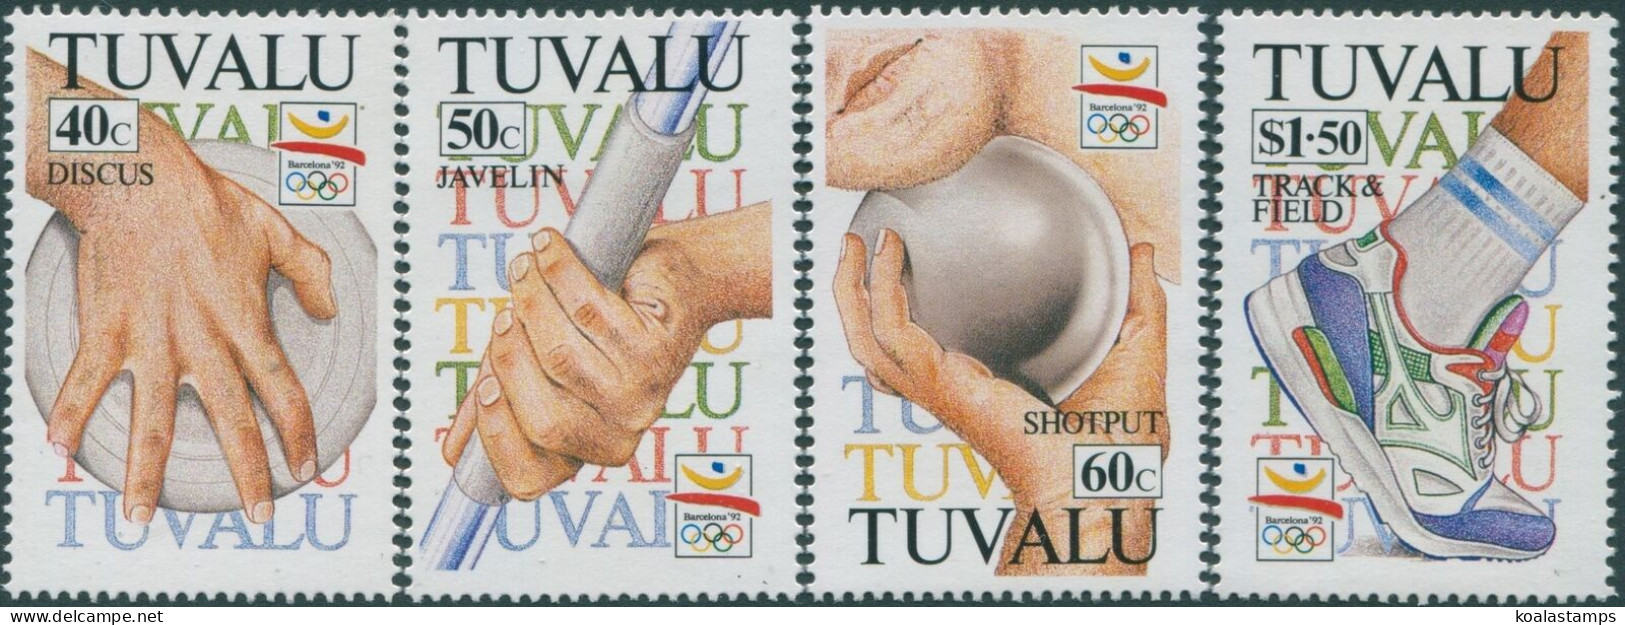 Tuvalu 1992 SG647-650 Olympic Games Set MNH - Tuvalu